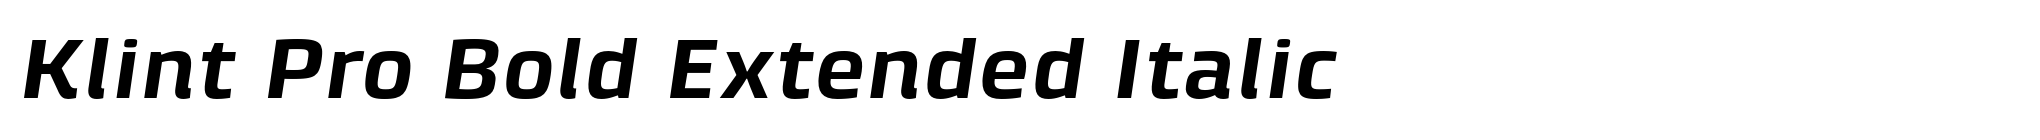 Klint Pro Bold Extended Italic image